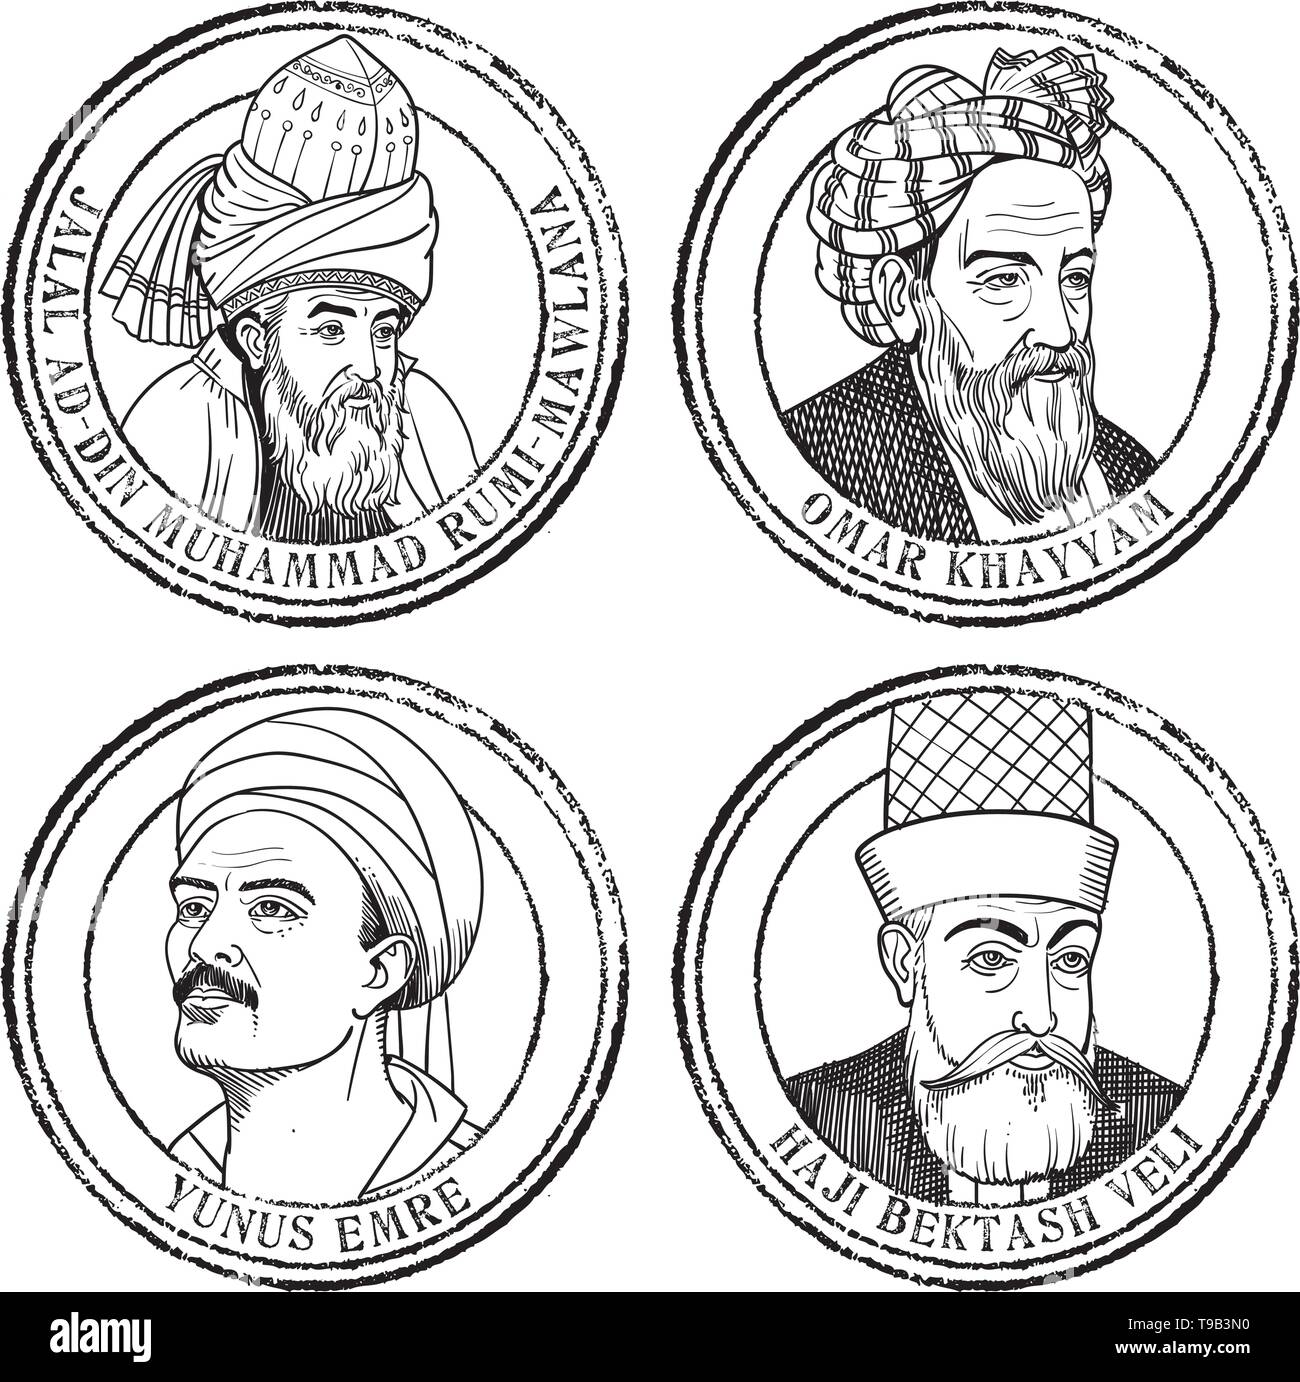 Islamic philosophers portraits stamp set, illustration Stock Vector